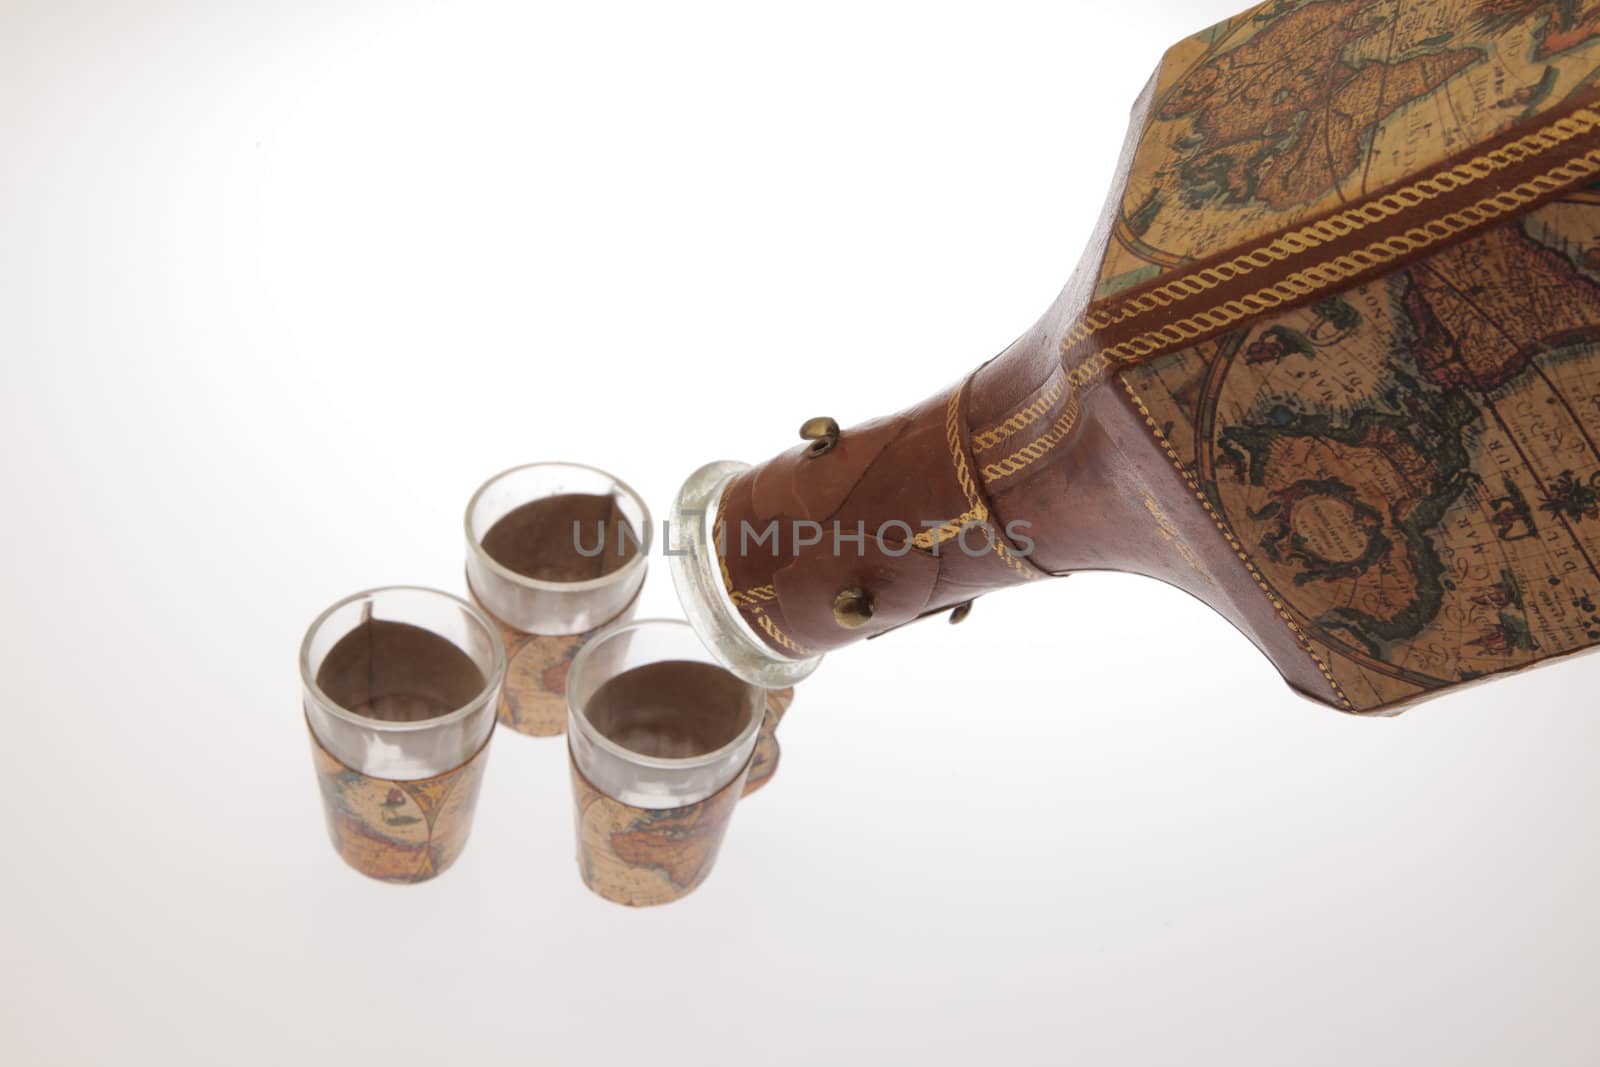 Explorer's liquor bottle with shot glasses by haiderazim